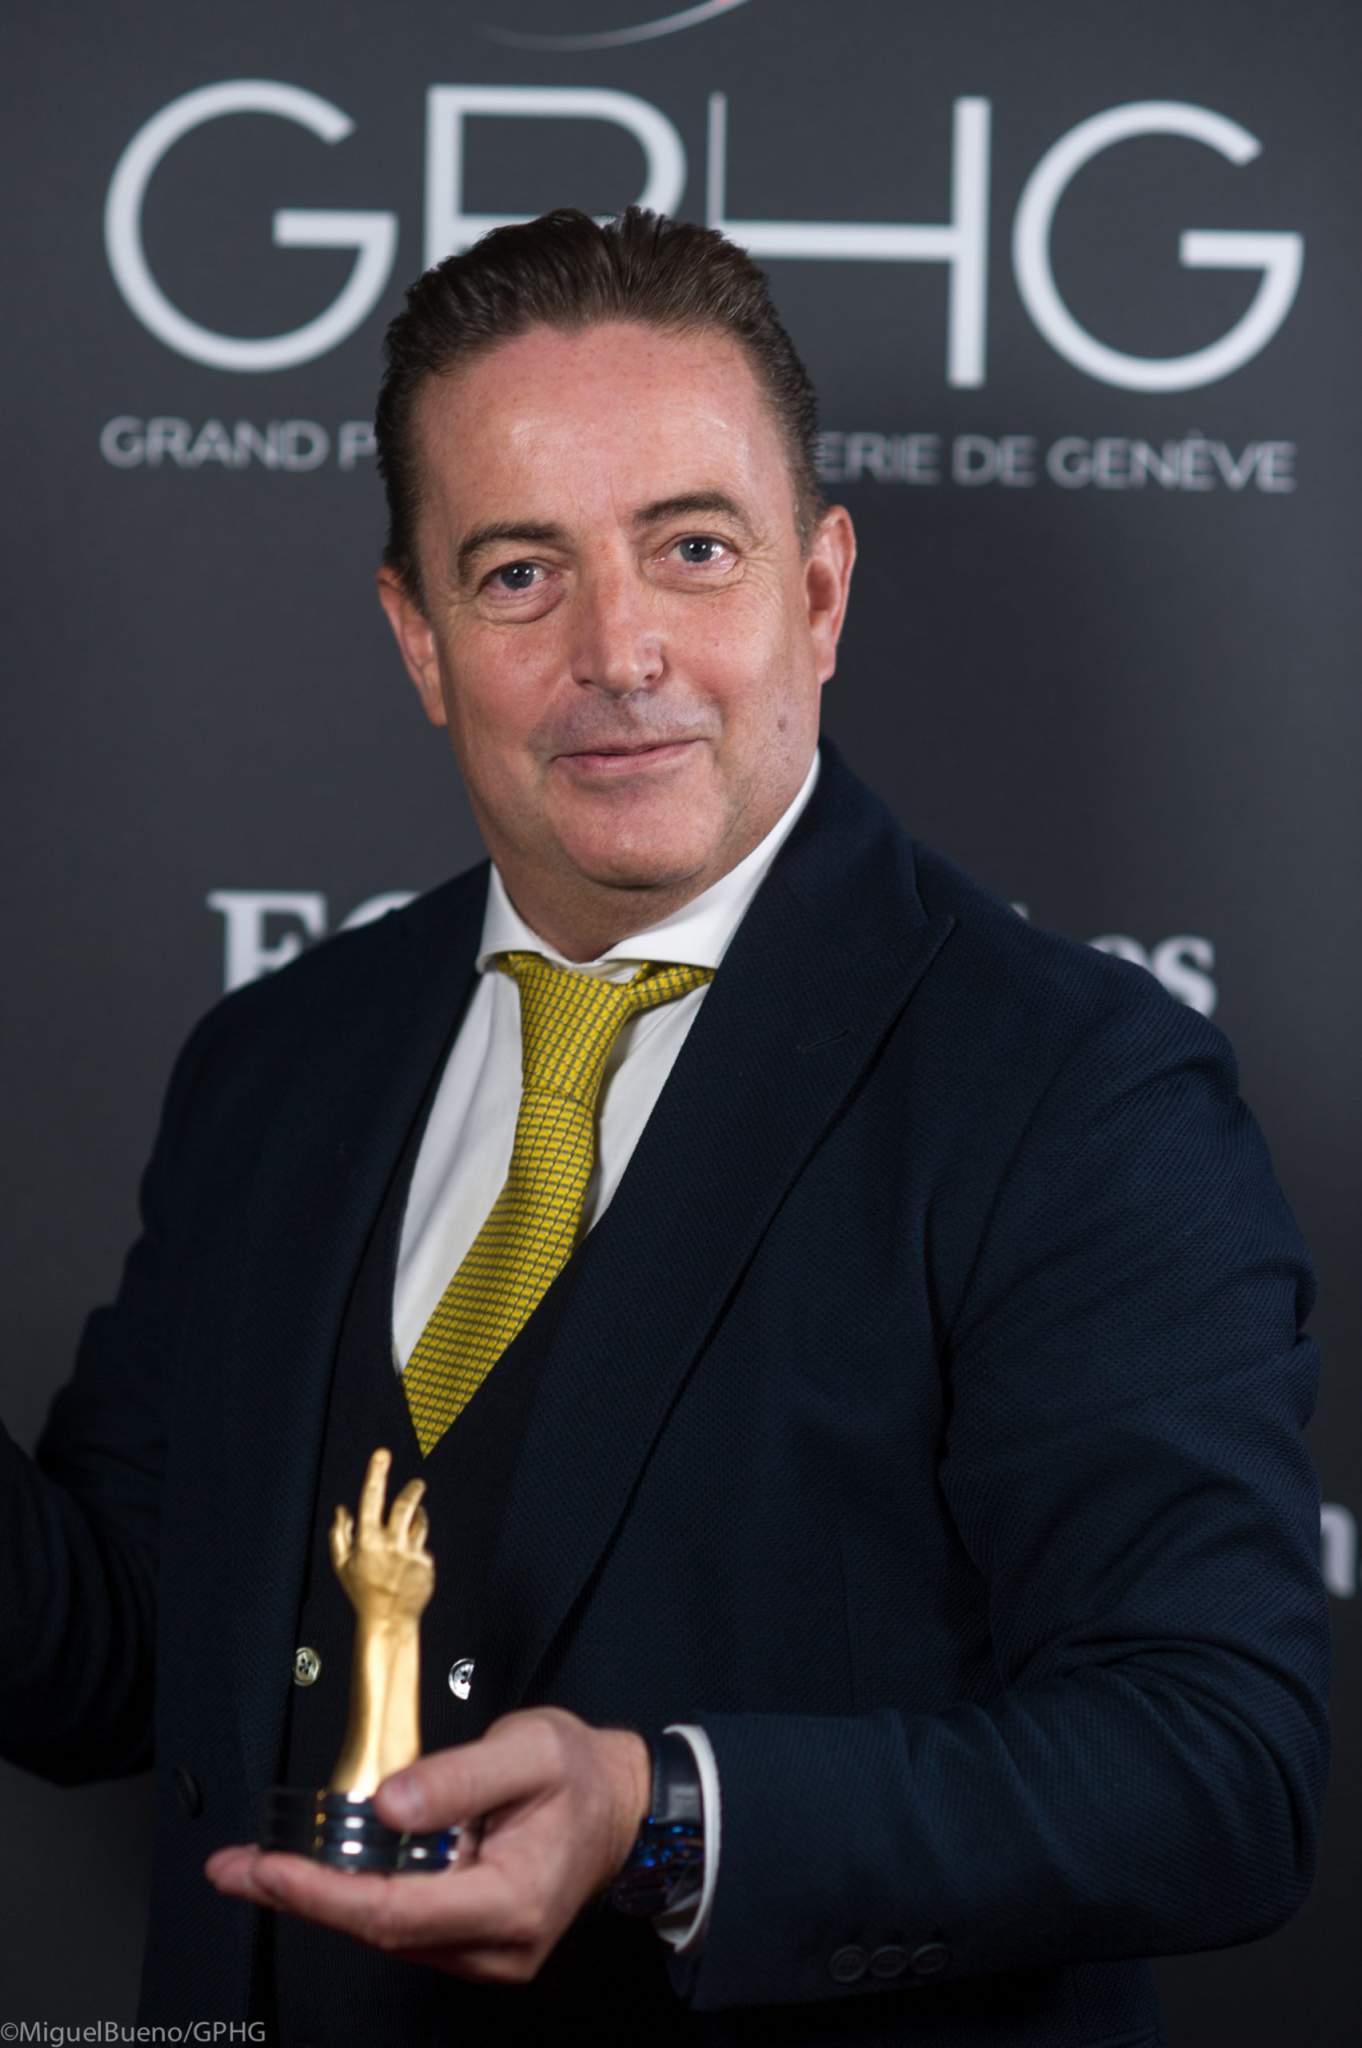 Pierre Jacques, CEO of De Bethune, winner of the Tourbillon Watch Prize 2021